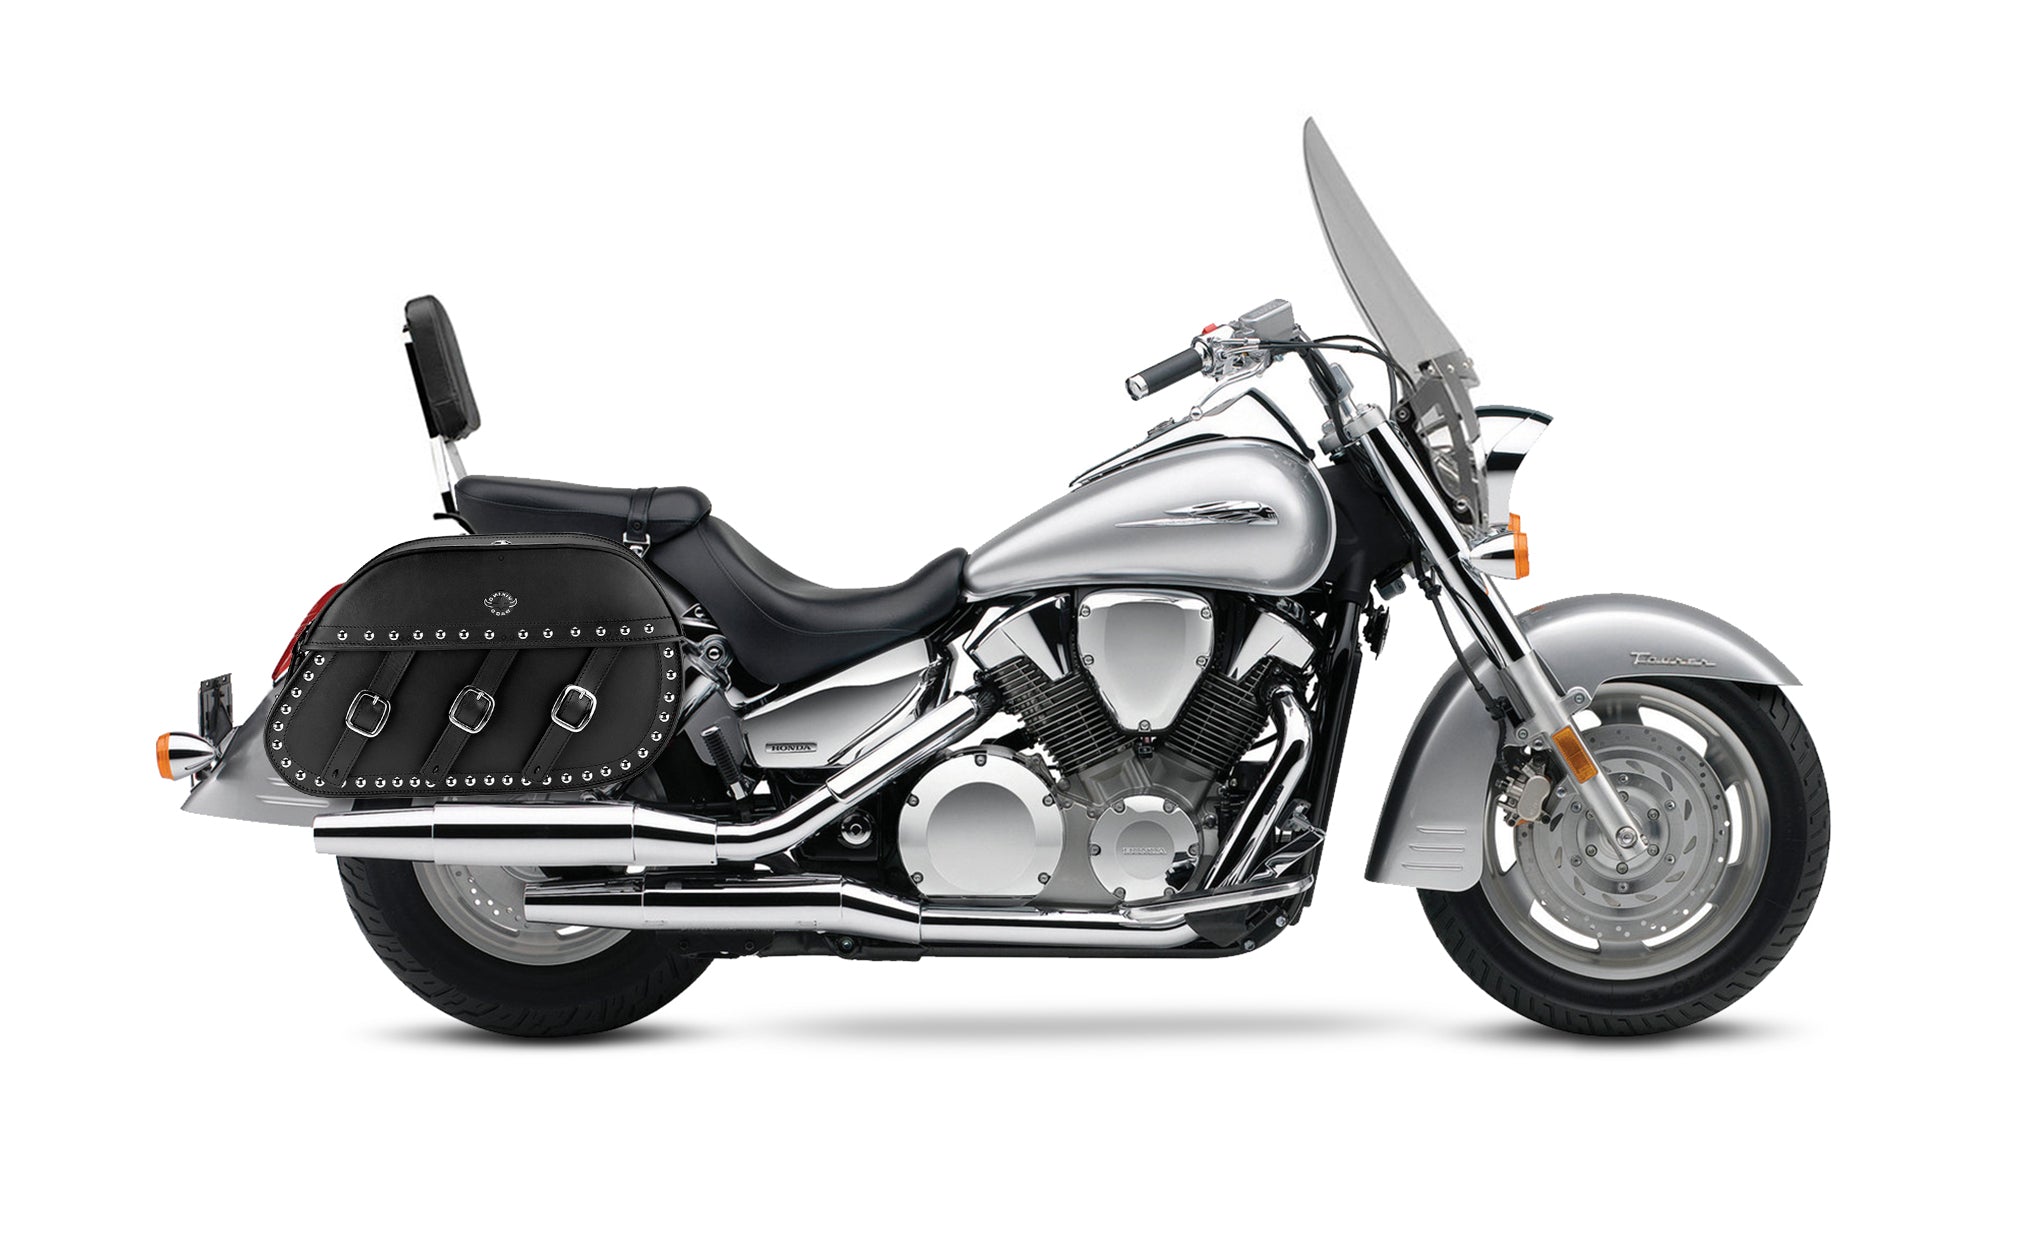 34L - Trianon Extra Large Honda VTX 1300 T (Tourer) Studded Leather Motorcycle Saddlebags on Bike Photo @expand